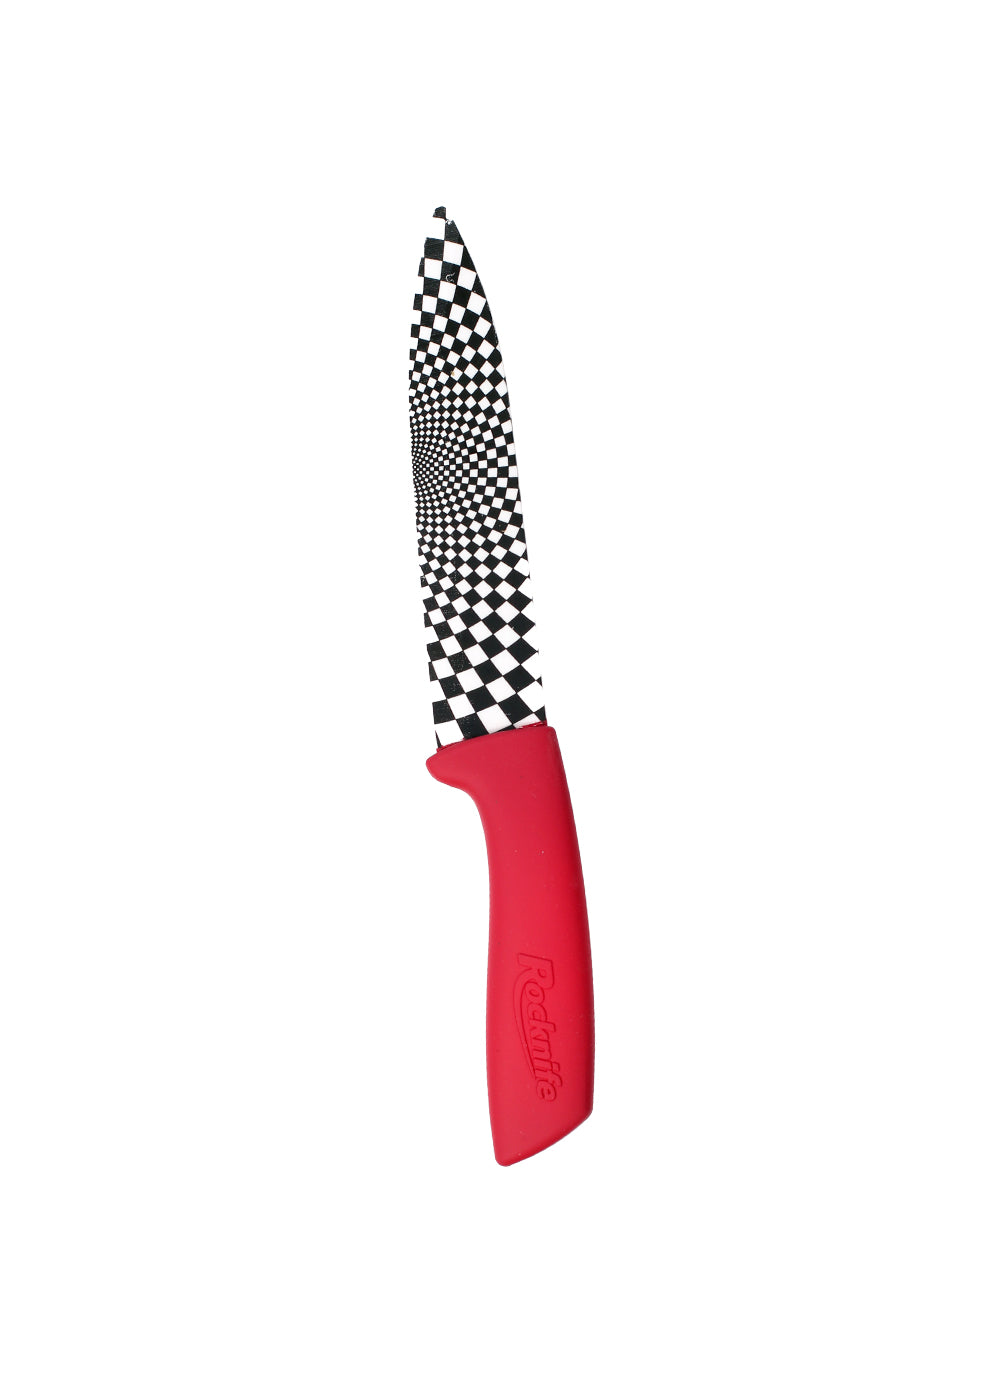 5 Inch Ceramic Kitchen Knife - Red